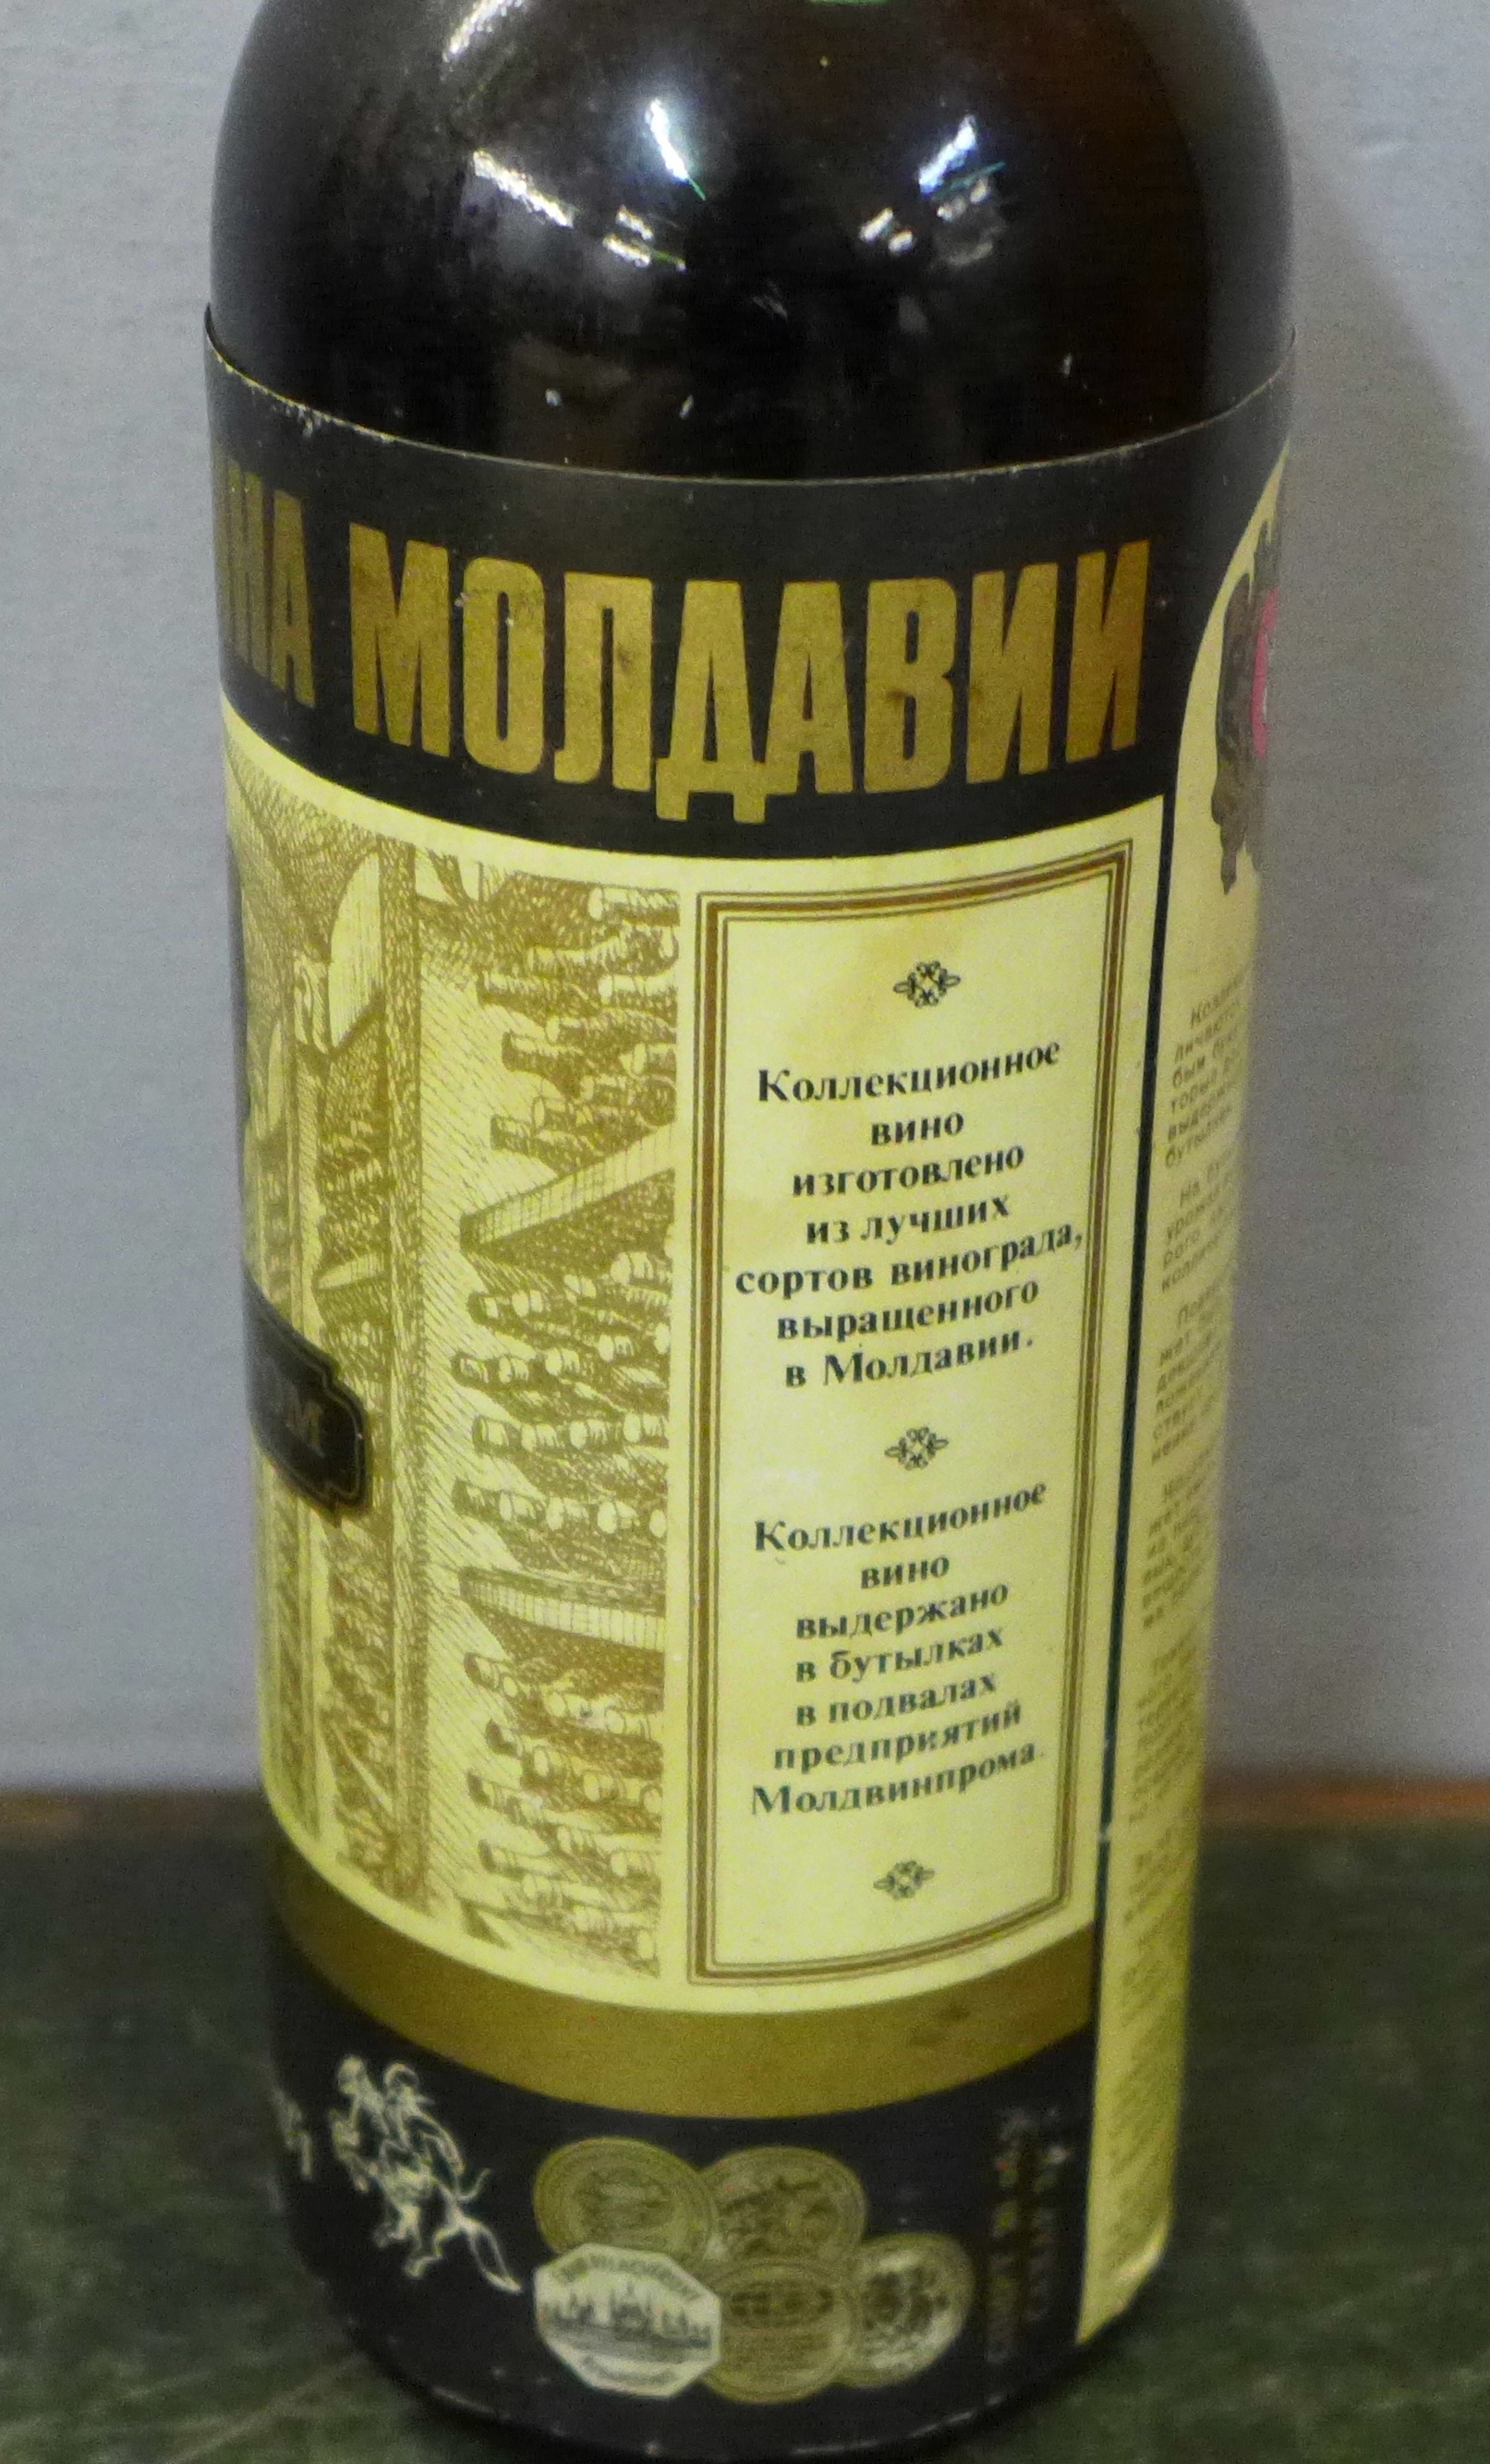 A bottle of Moldavian wine - Image 3 of 5